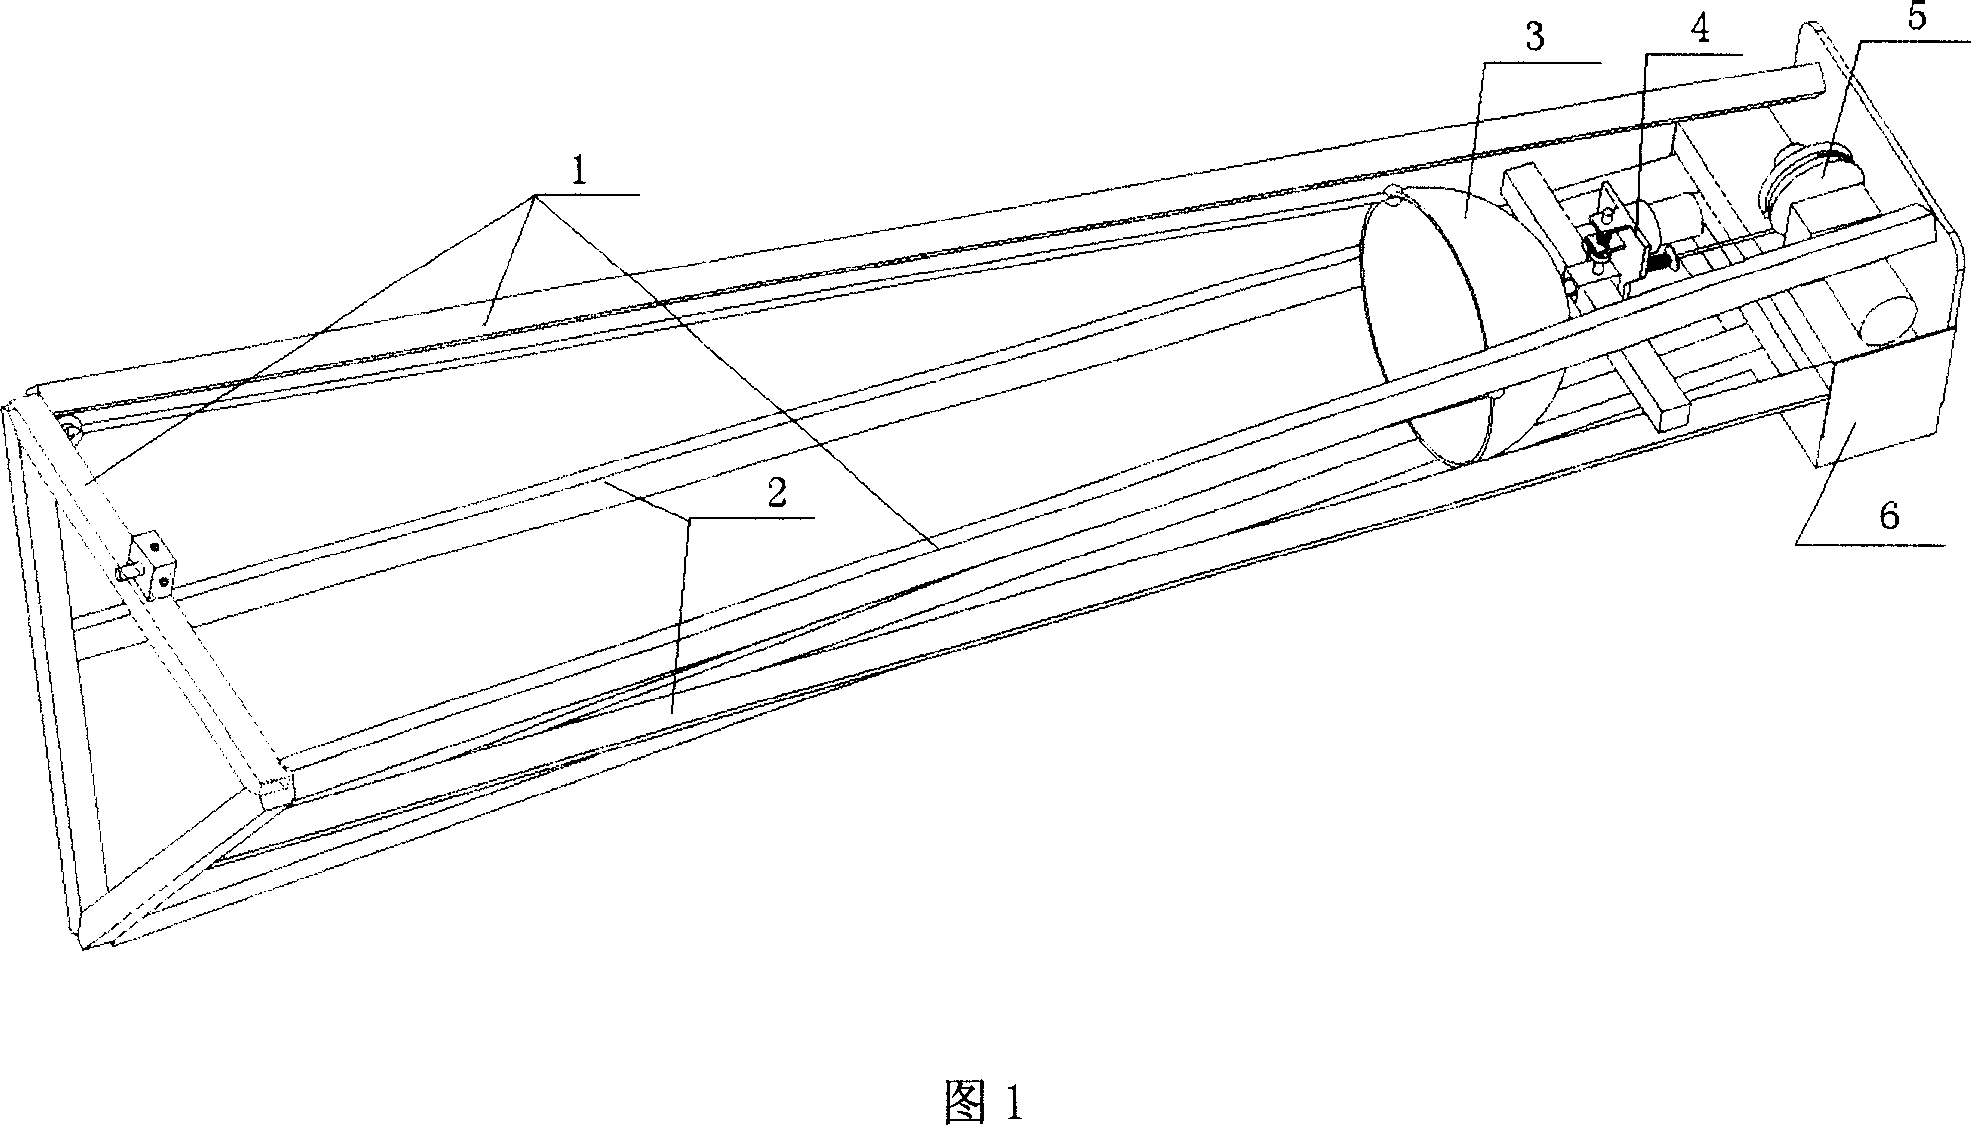 Three elastic band rail gun barrel type launching mechanism